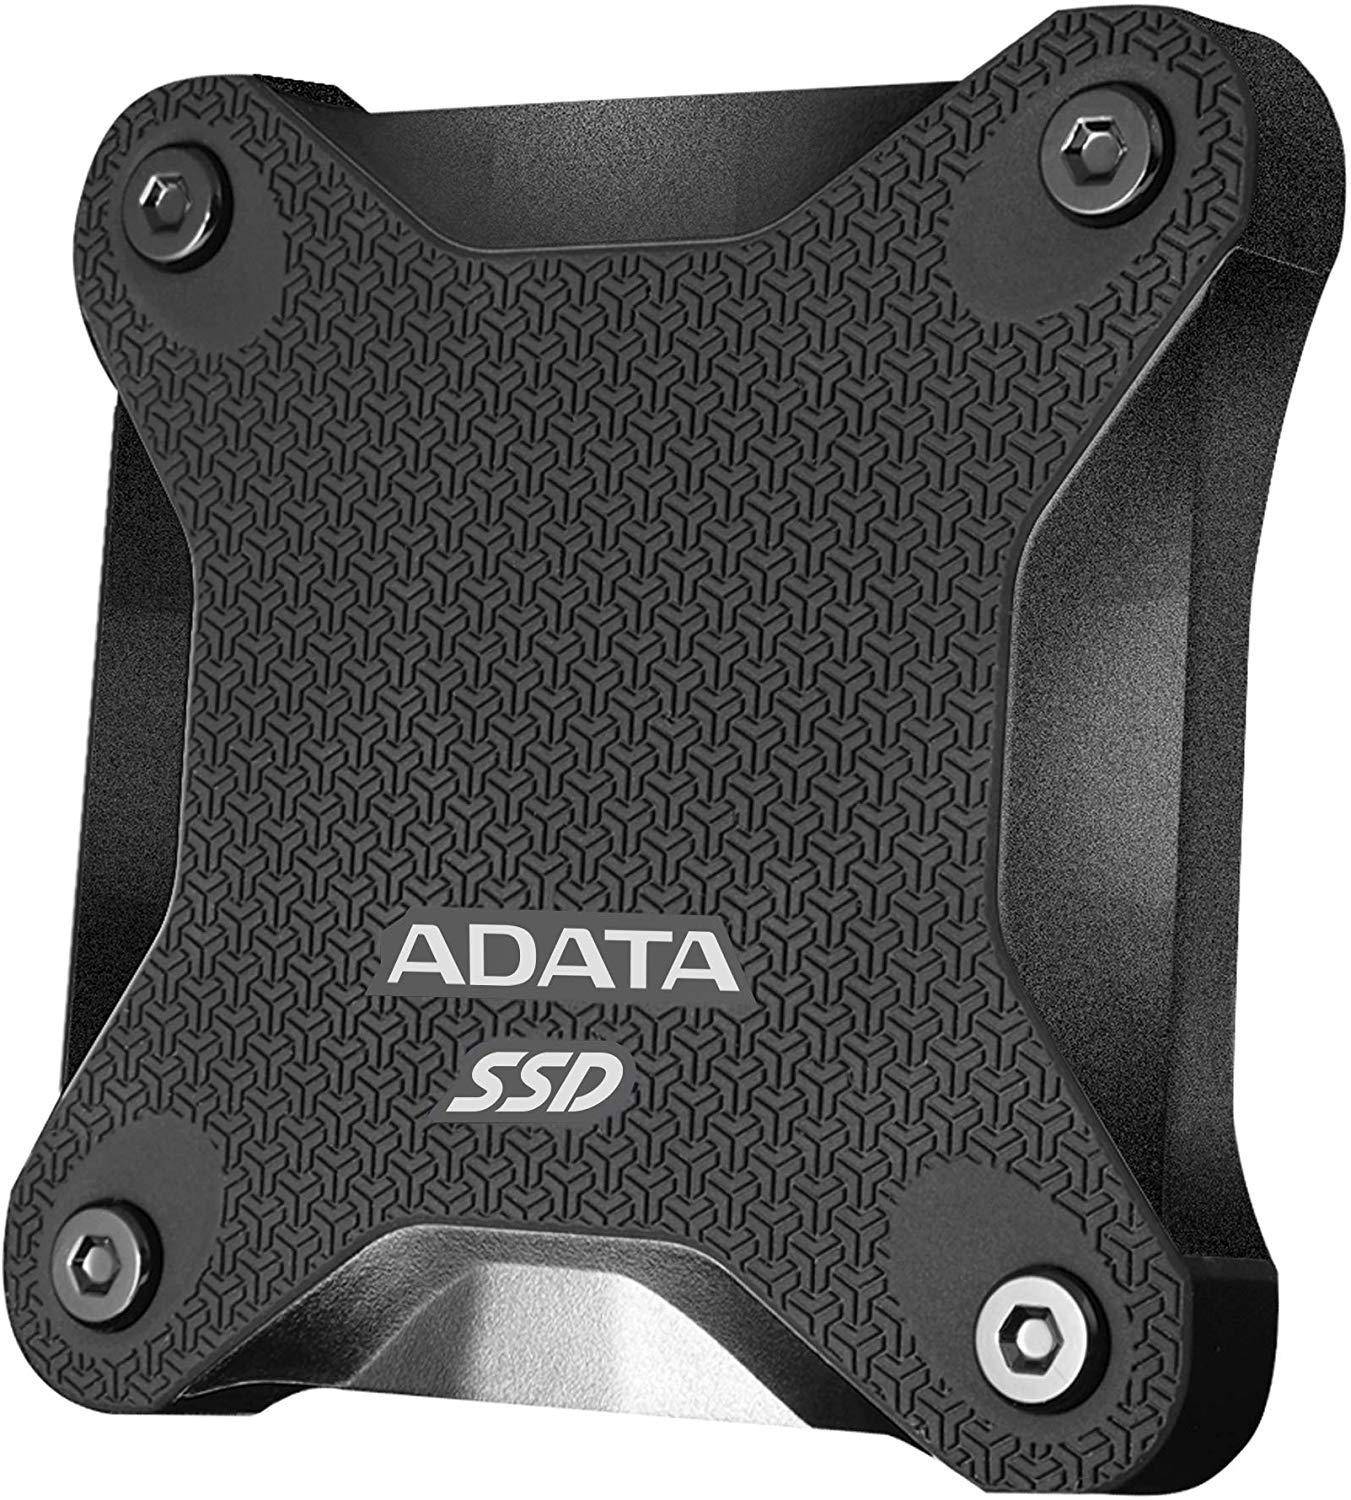 ADATA SD600Q 256GB (USB 3.2 | Up to 440MB/s Speed | 60g)